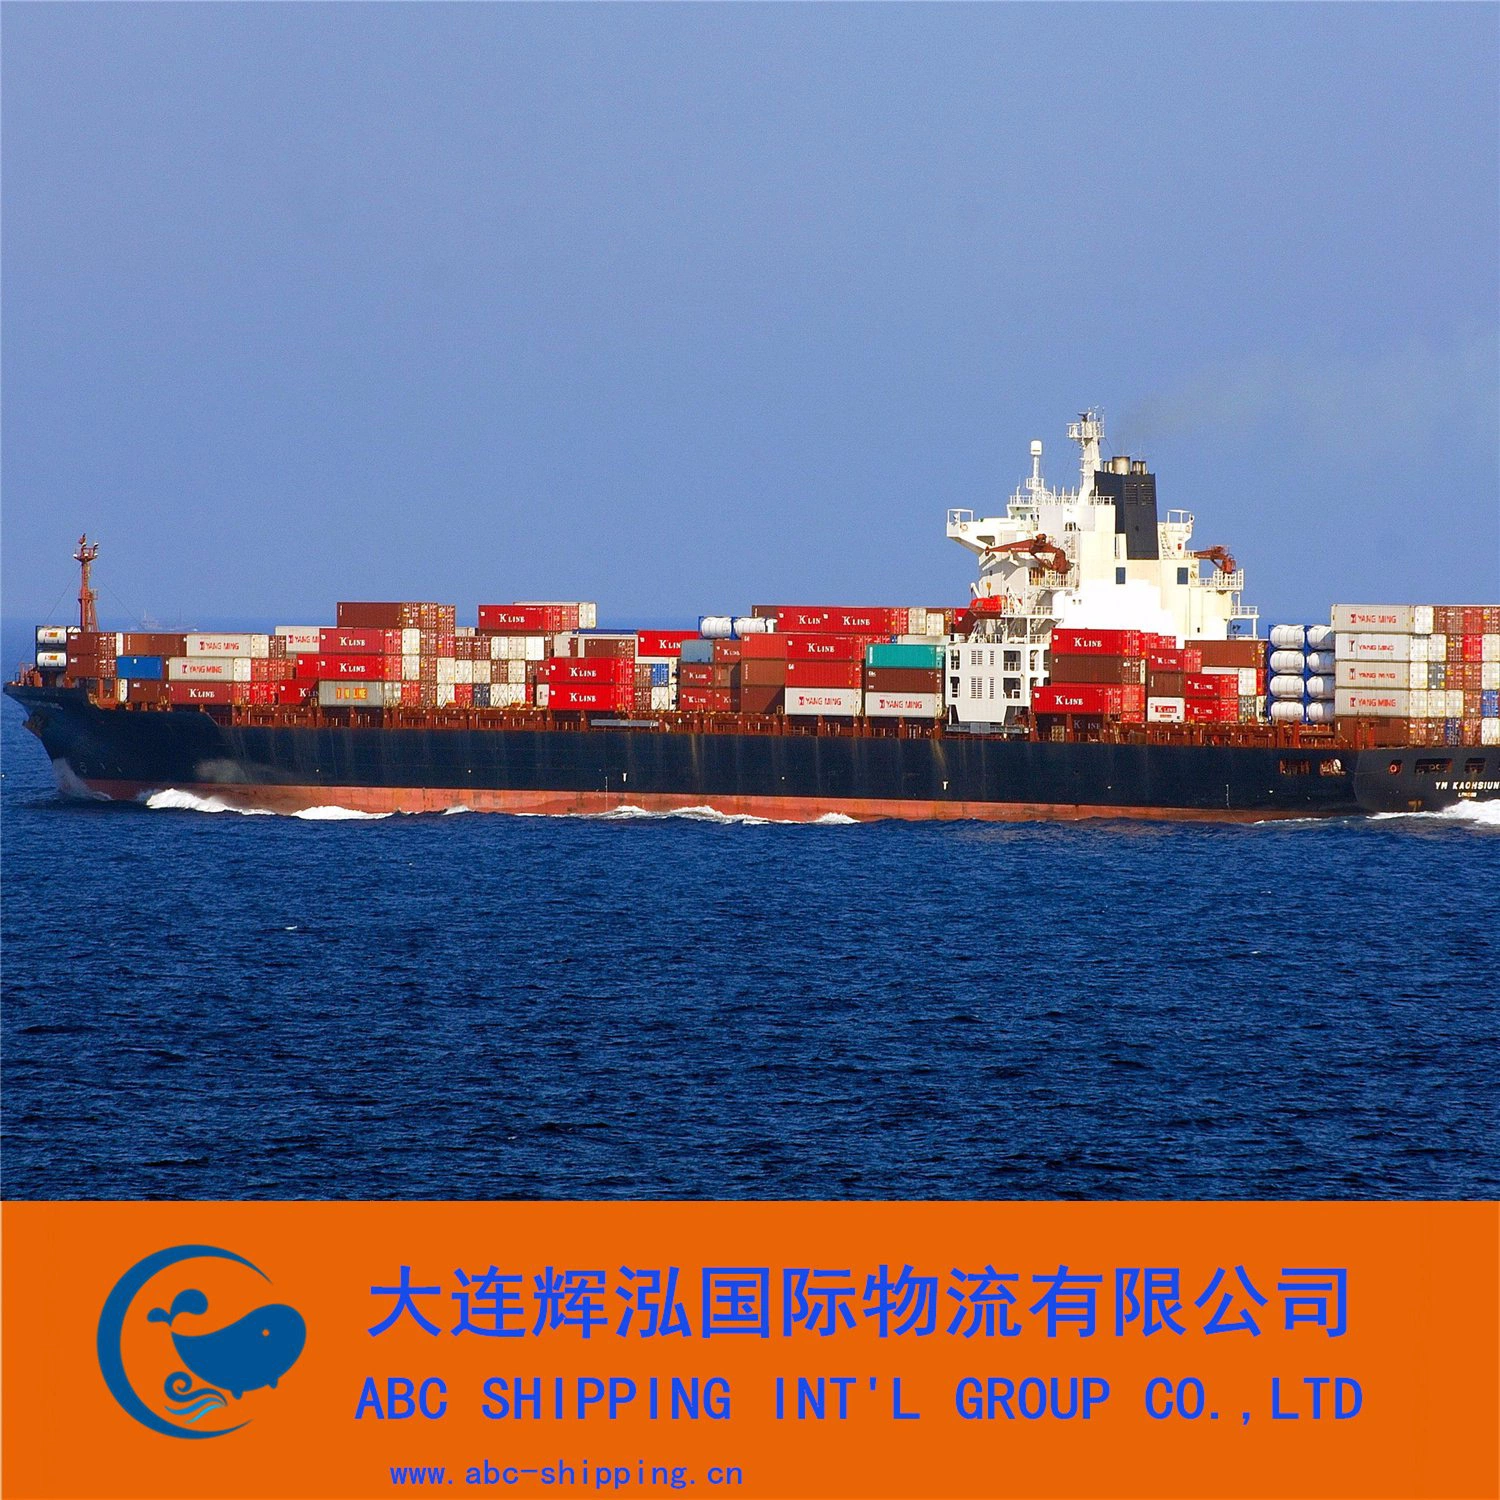 Fastest International Cargo Transportation Service System